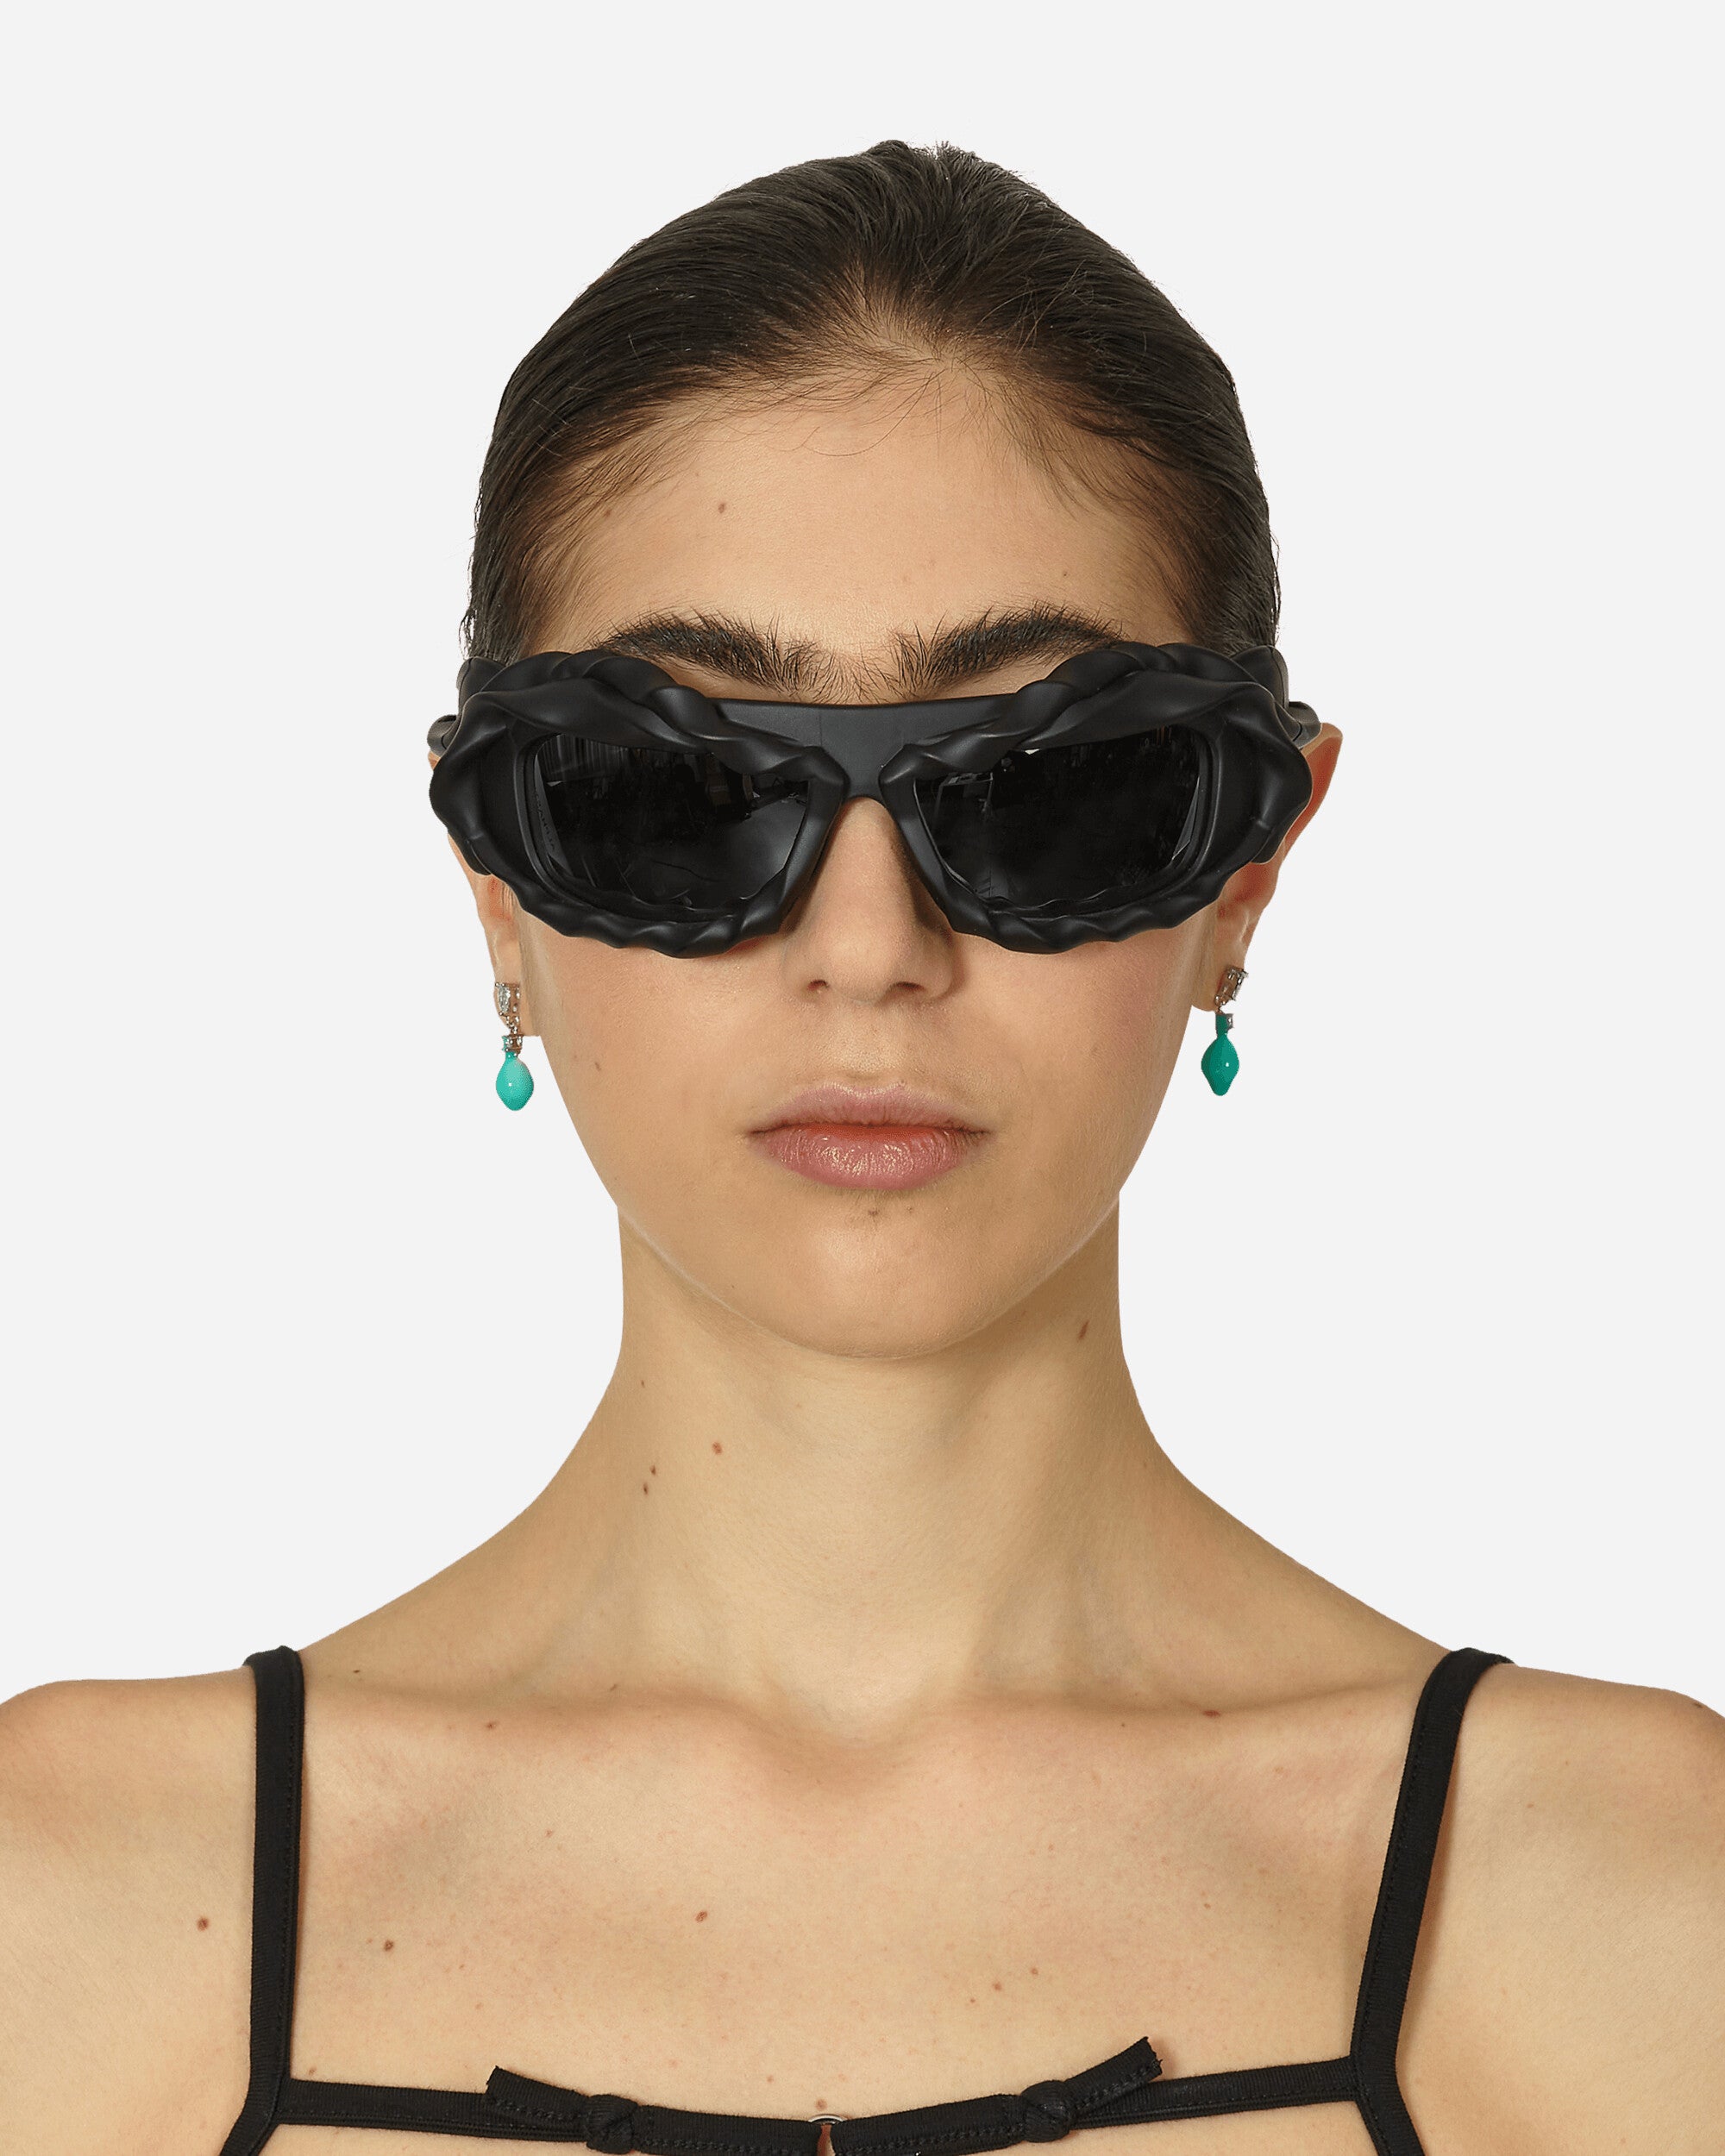 Ottolinger Wmns Twisted Sunglasses Black/Mirror Eyewear Sunglasses 2701123 BLACKM